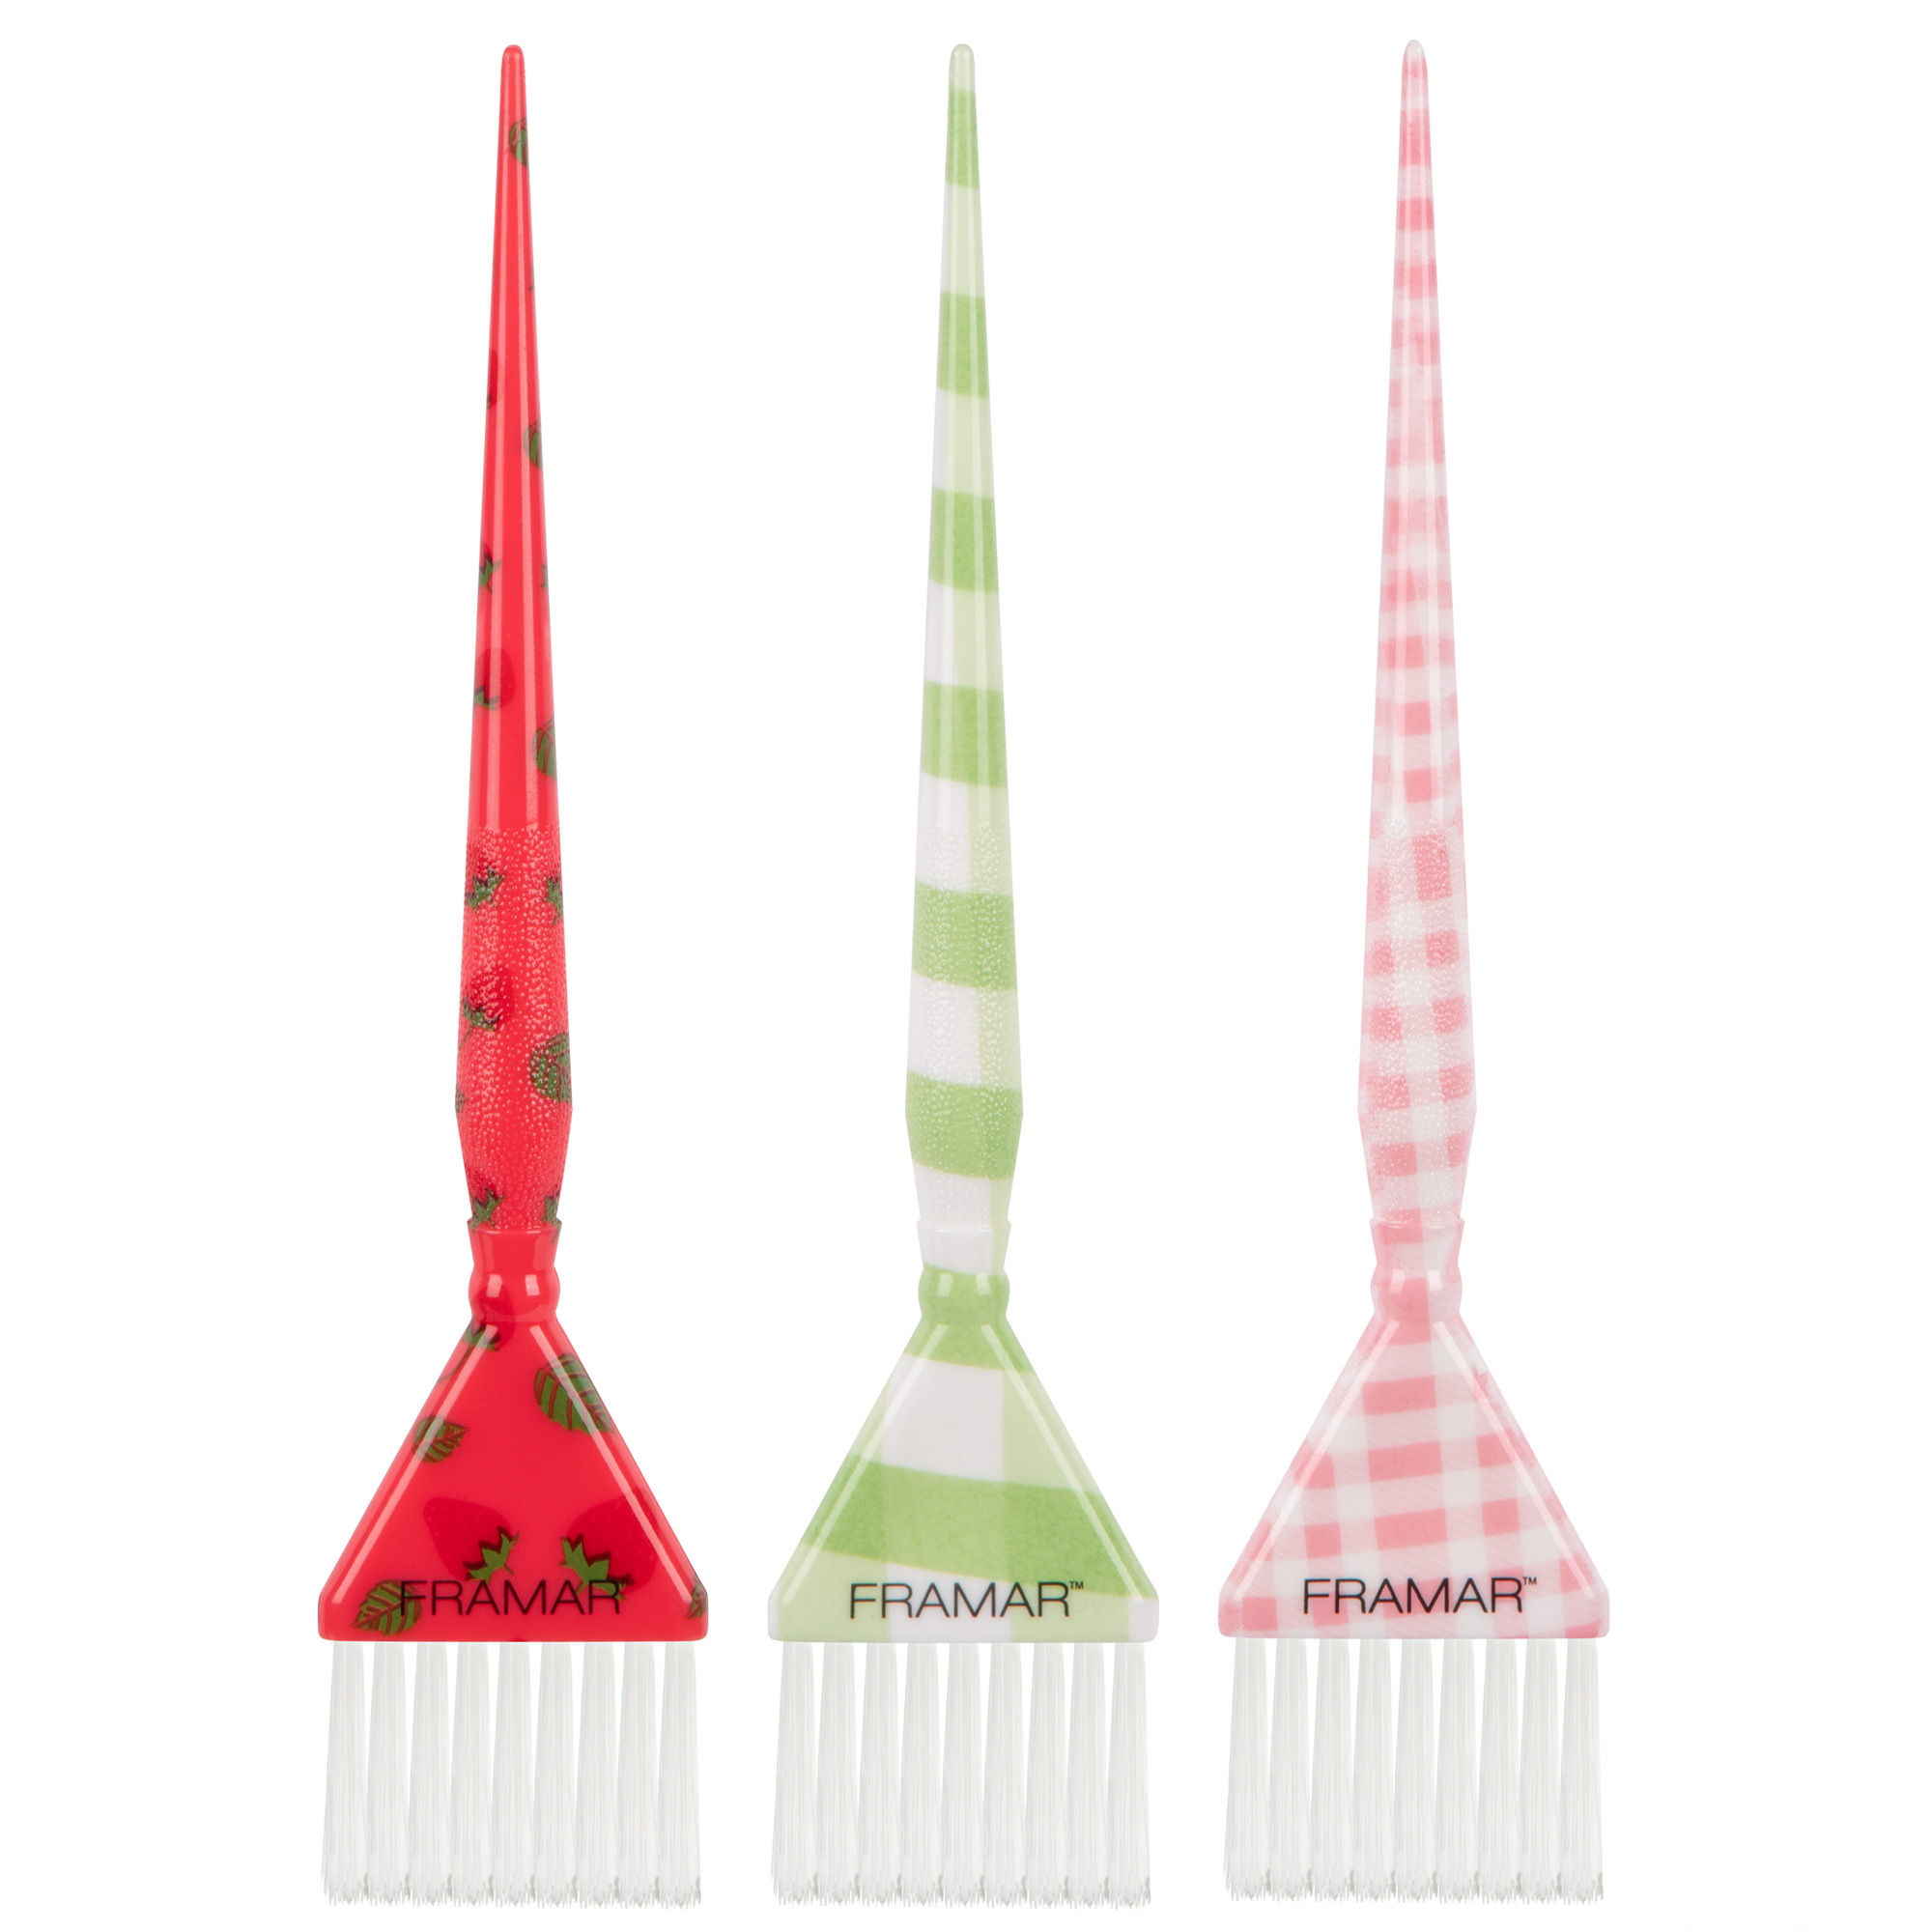  COLOR BRUSHES: Triple Threat Color Brush Set - 3 Pk - Strawberry Shortcake